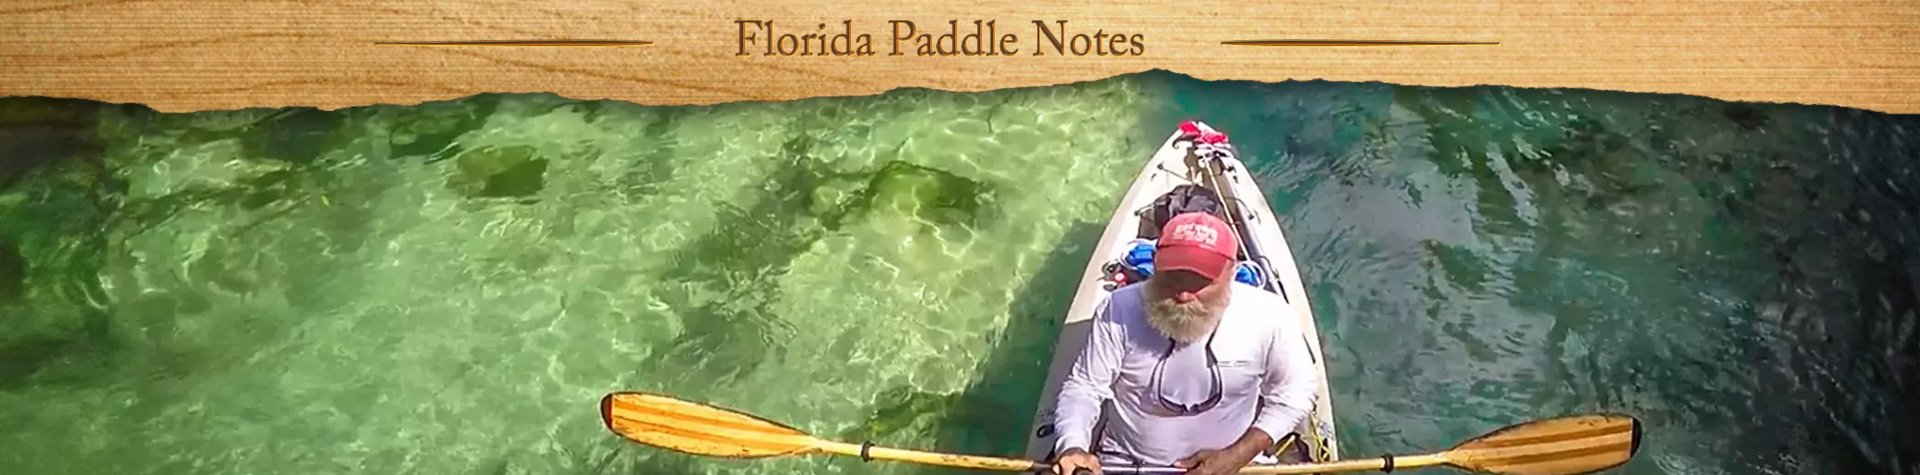 Florida Paddle Notes